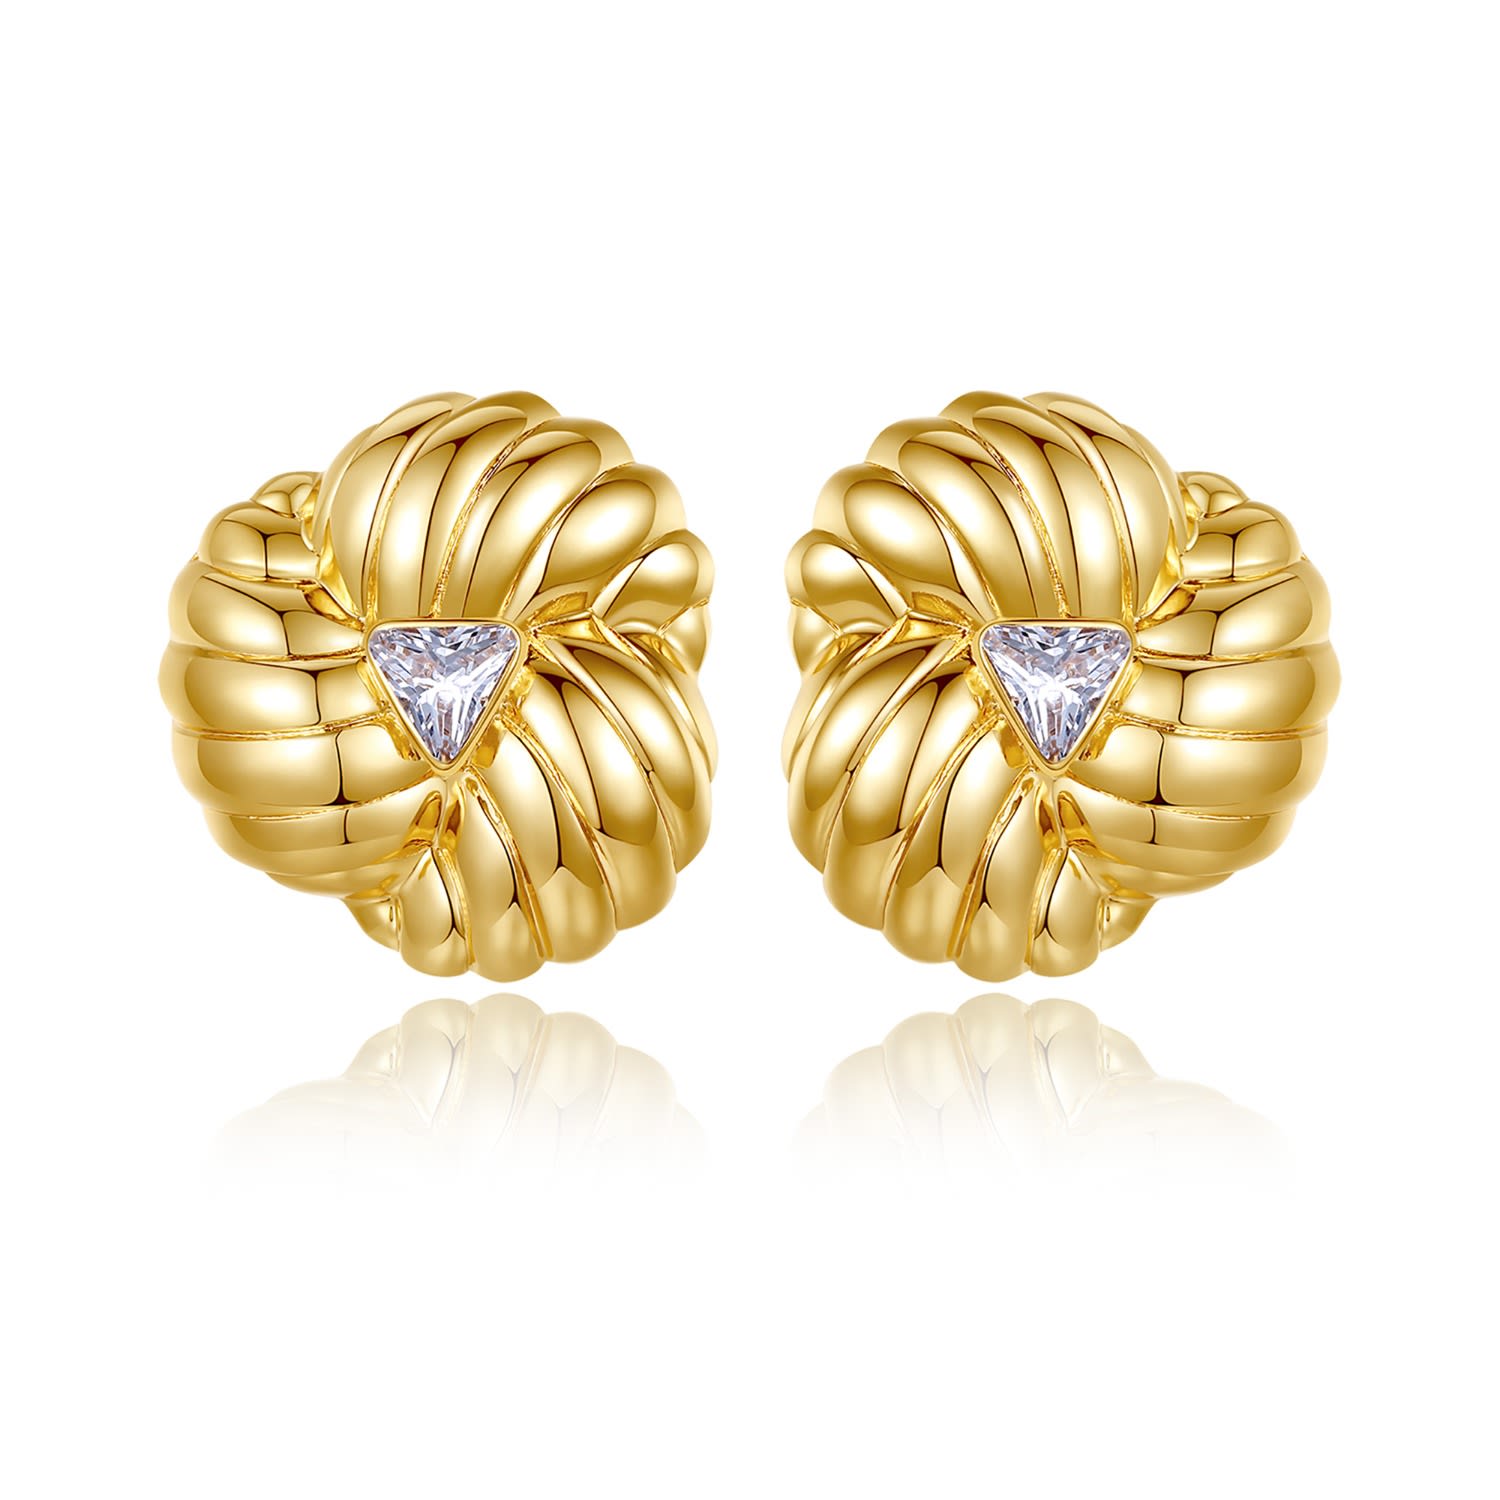 Shop Classicharms Women's Gold Clover Stud Earrings